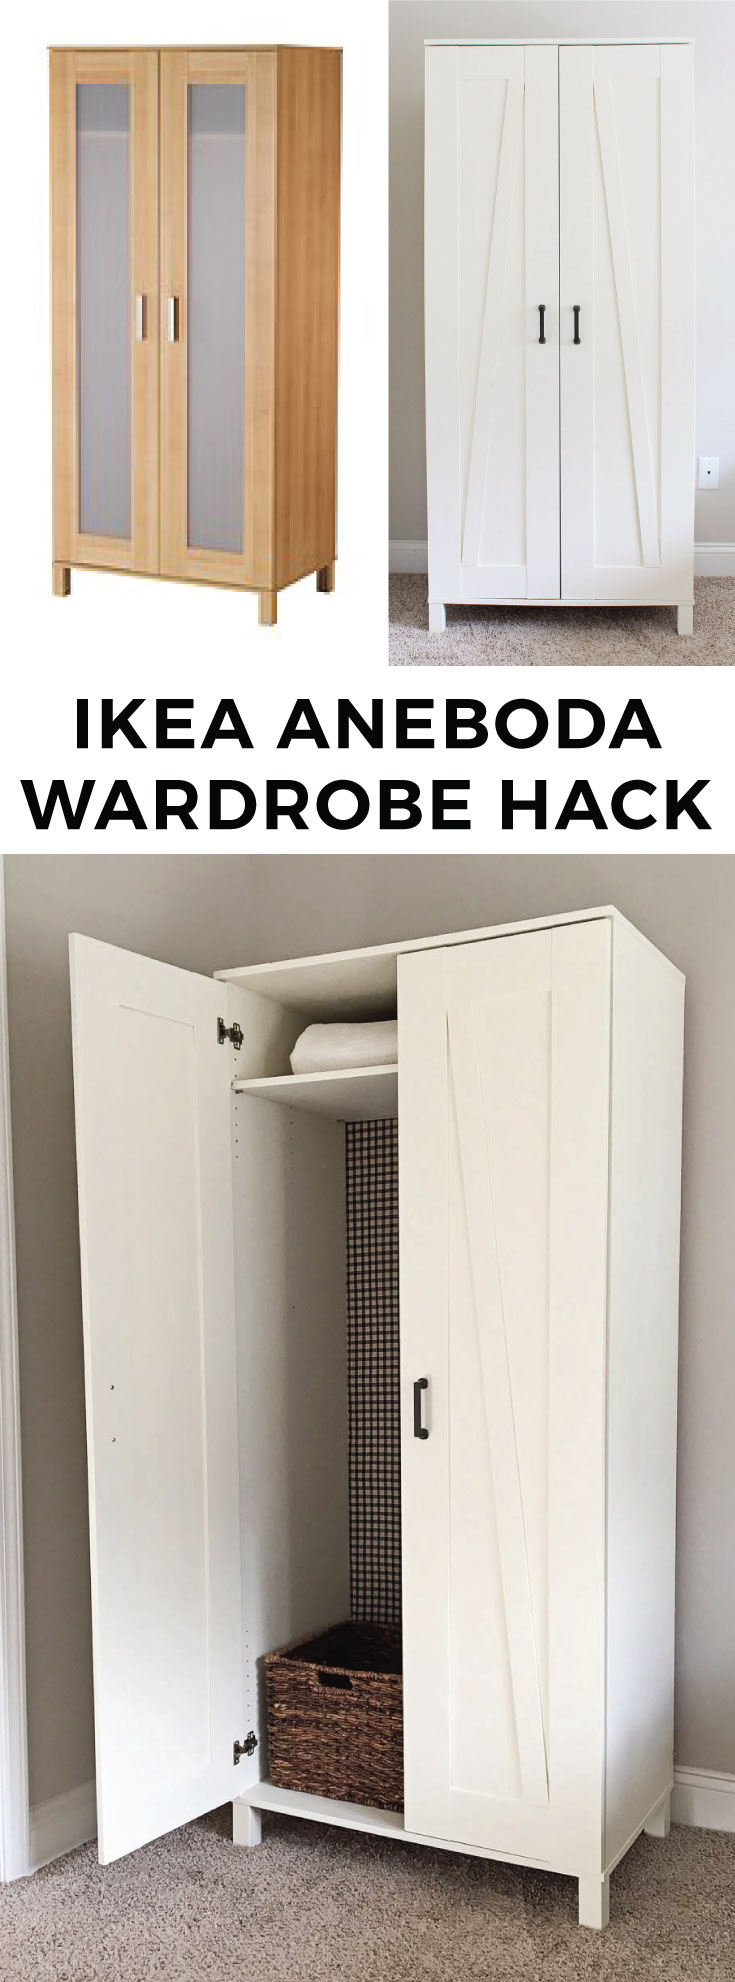 IKEA Hack - Aneboda Wardrobe